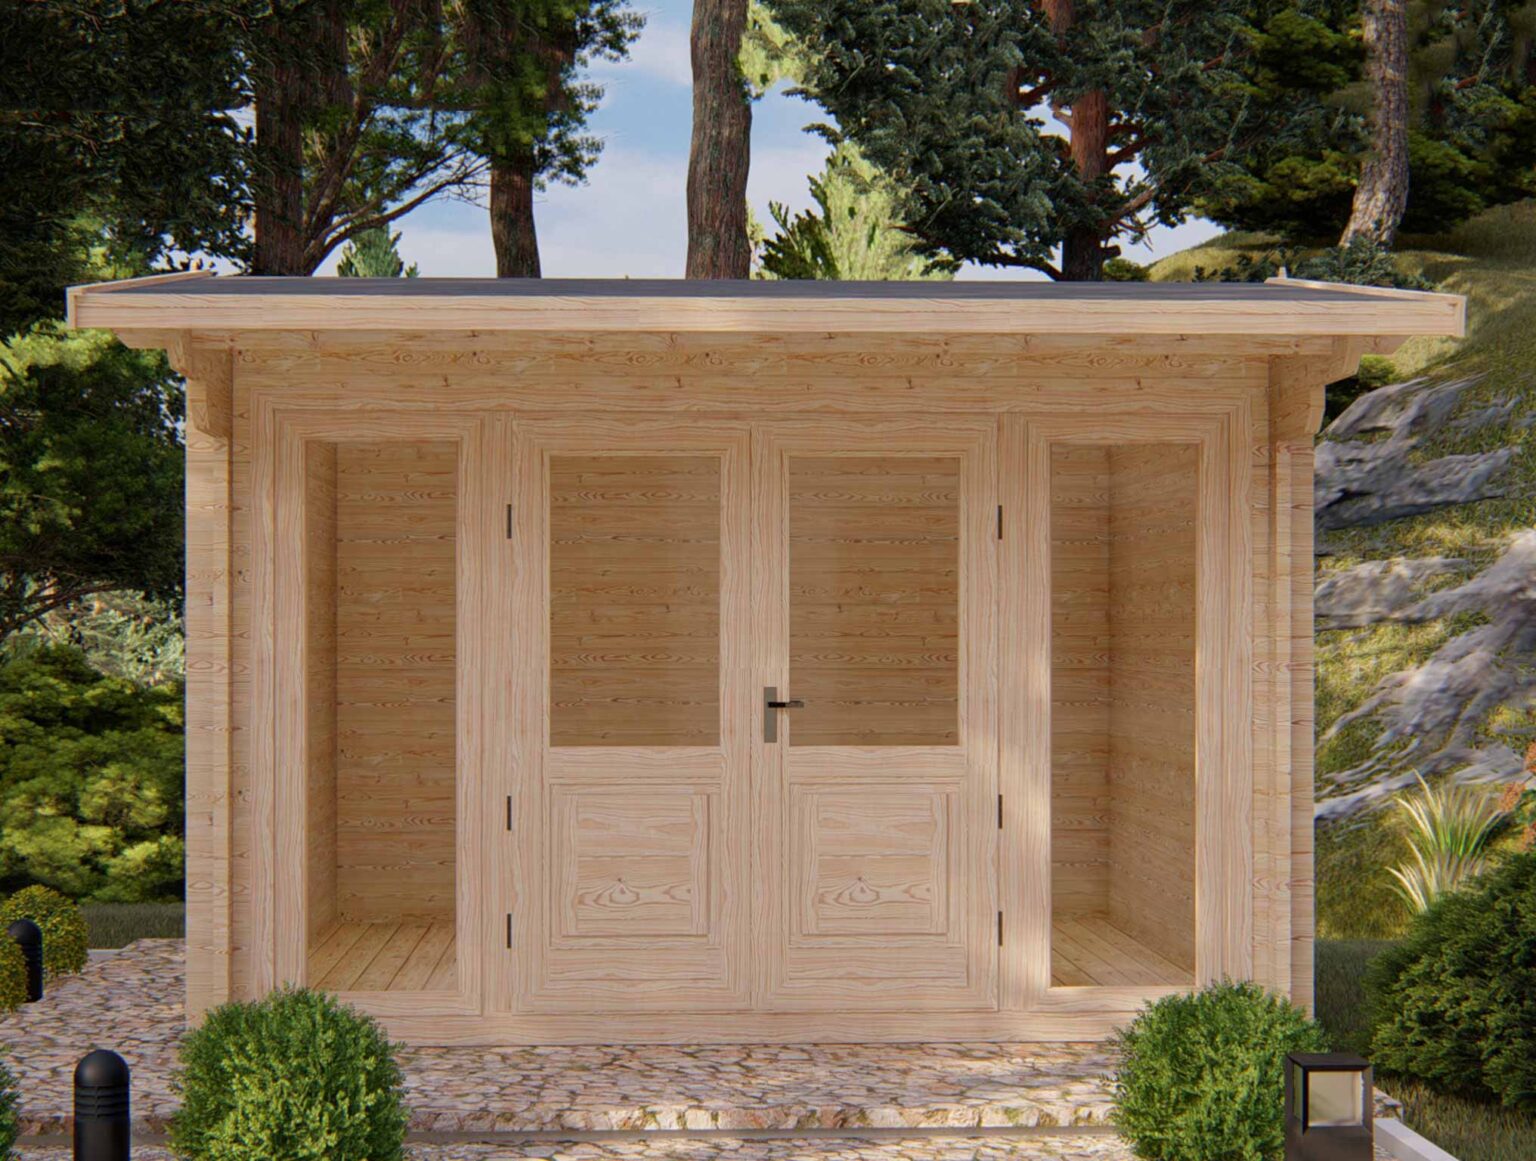 Milton Keynes Log Cabin 3.5m x 3m Skinners Sheds